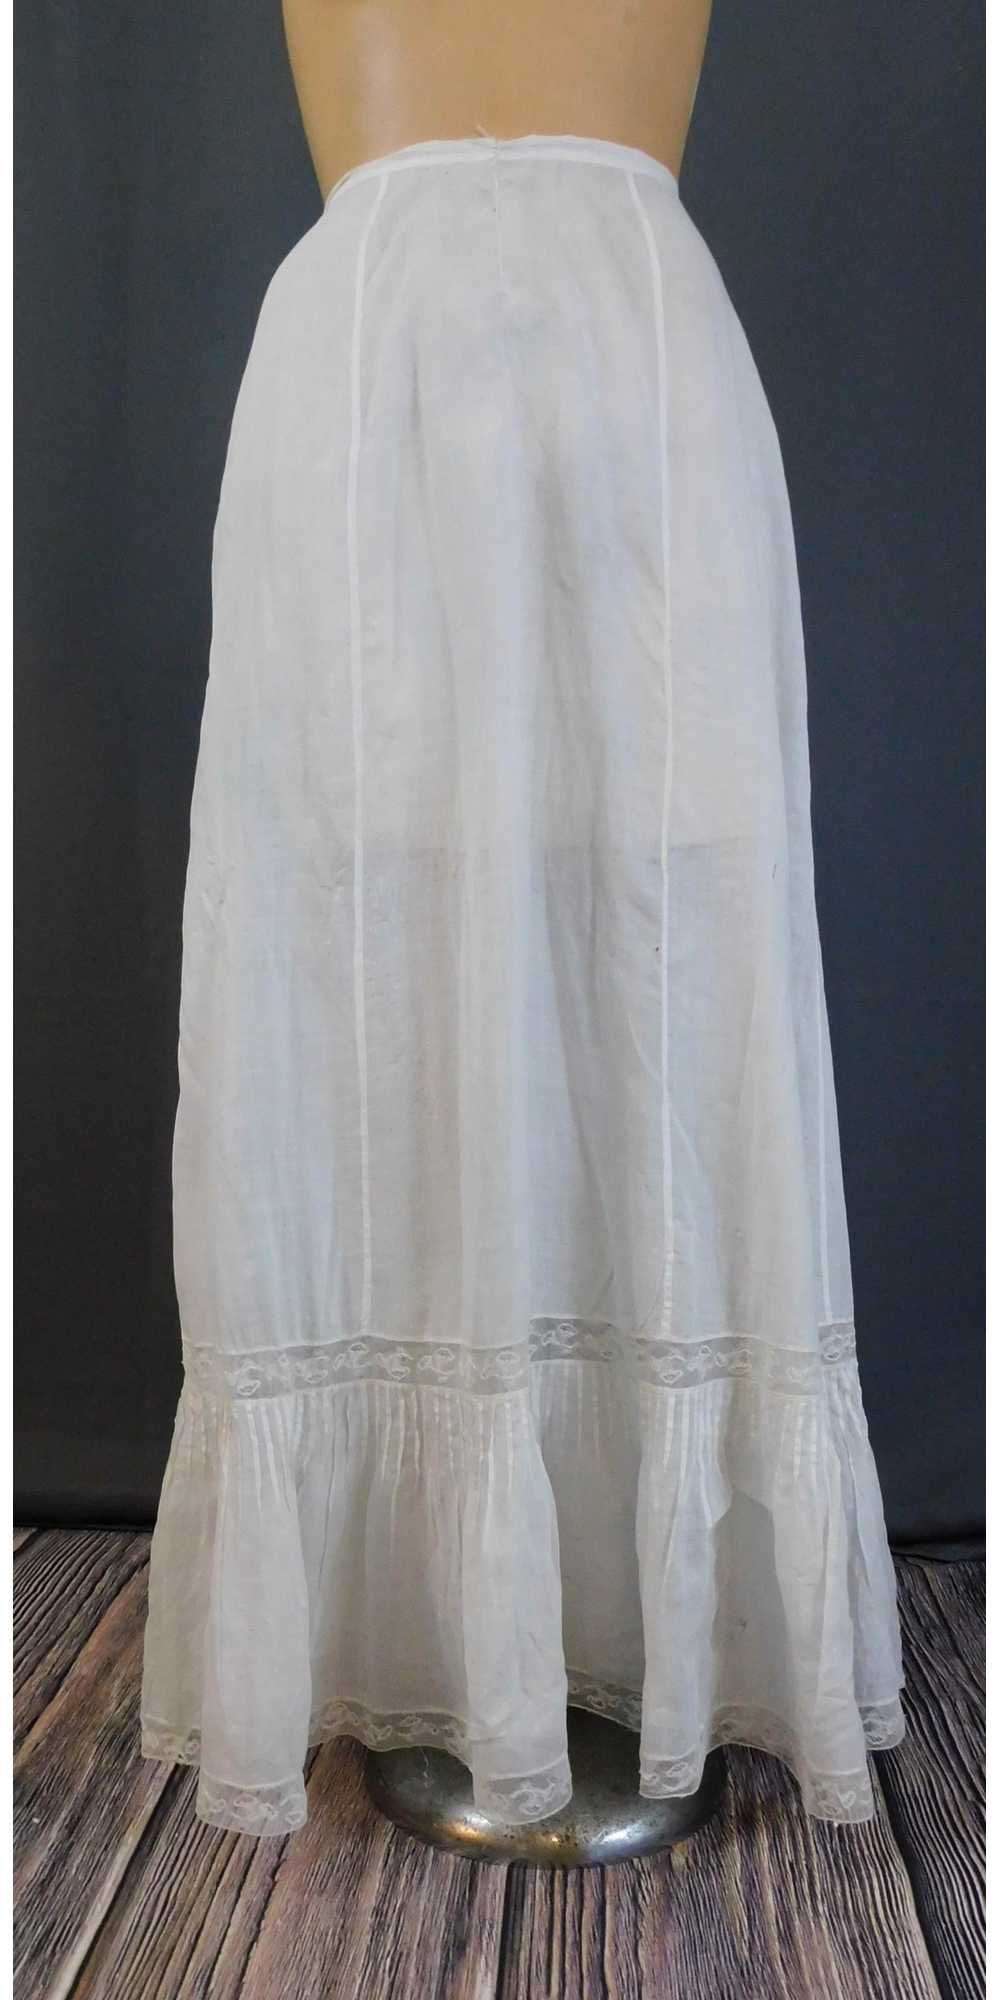 Antique Edwardian Petticoat XS 21 inch waist, Thin Wh… - Gem